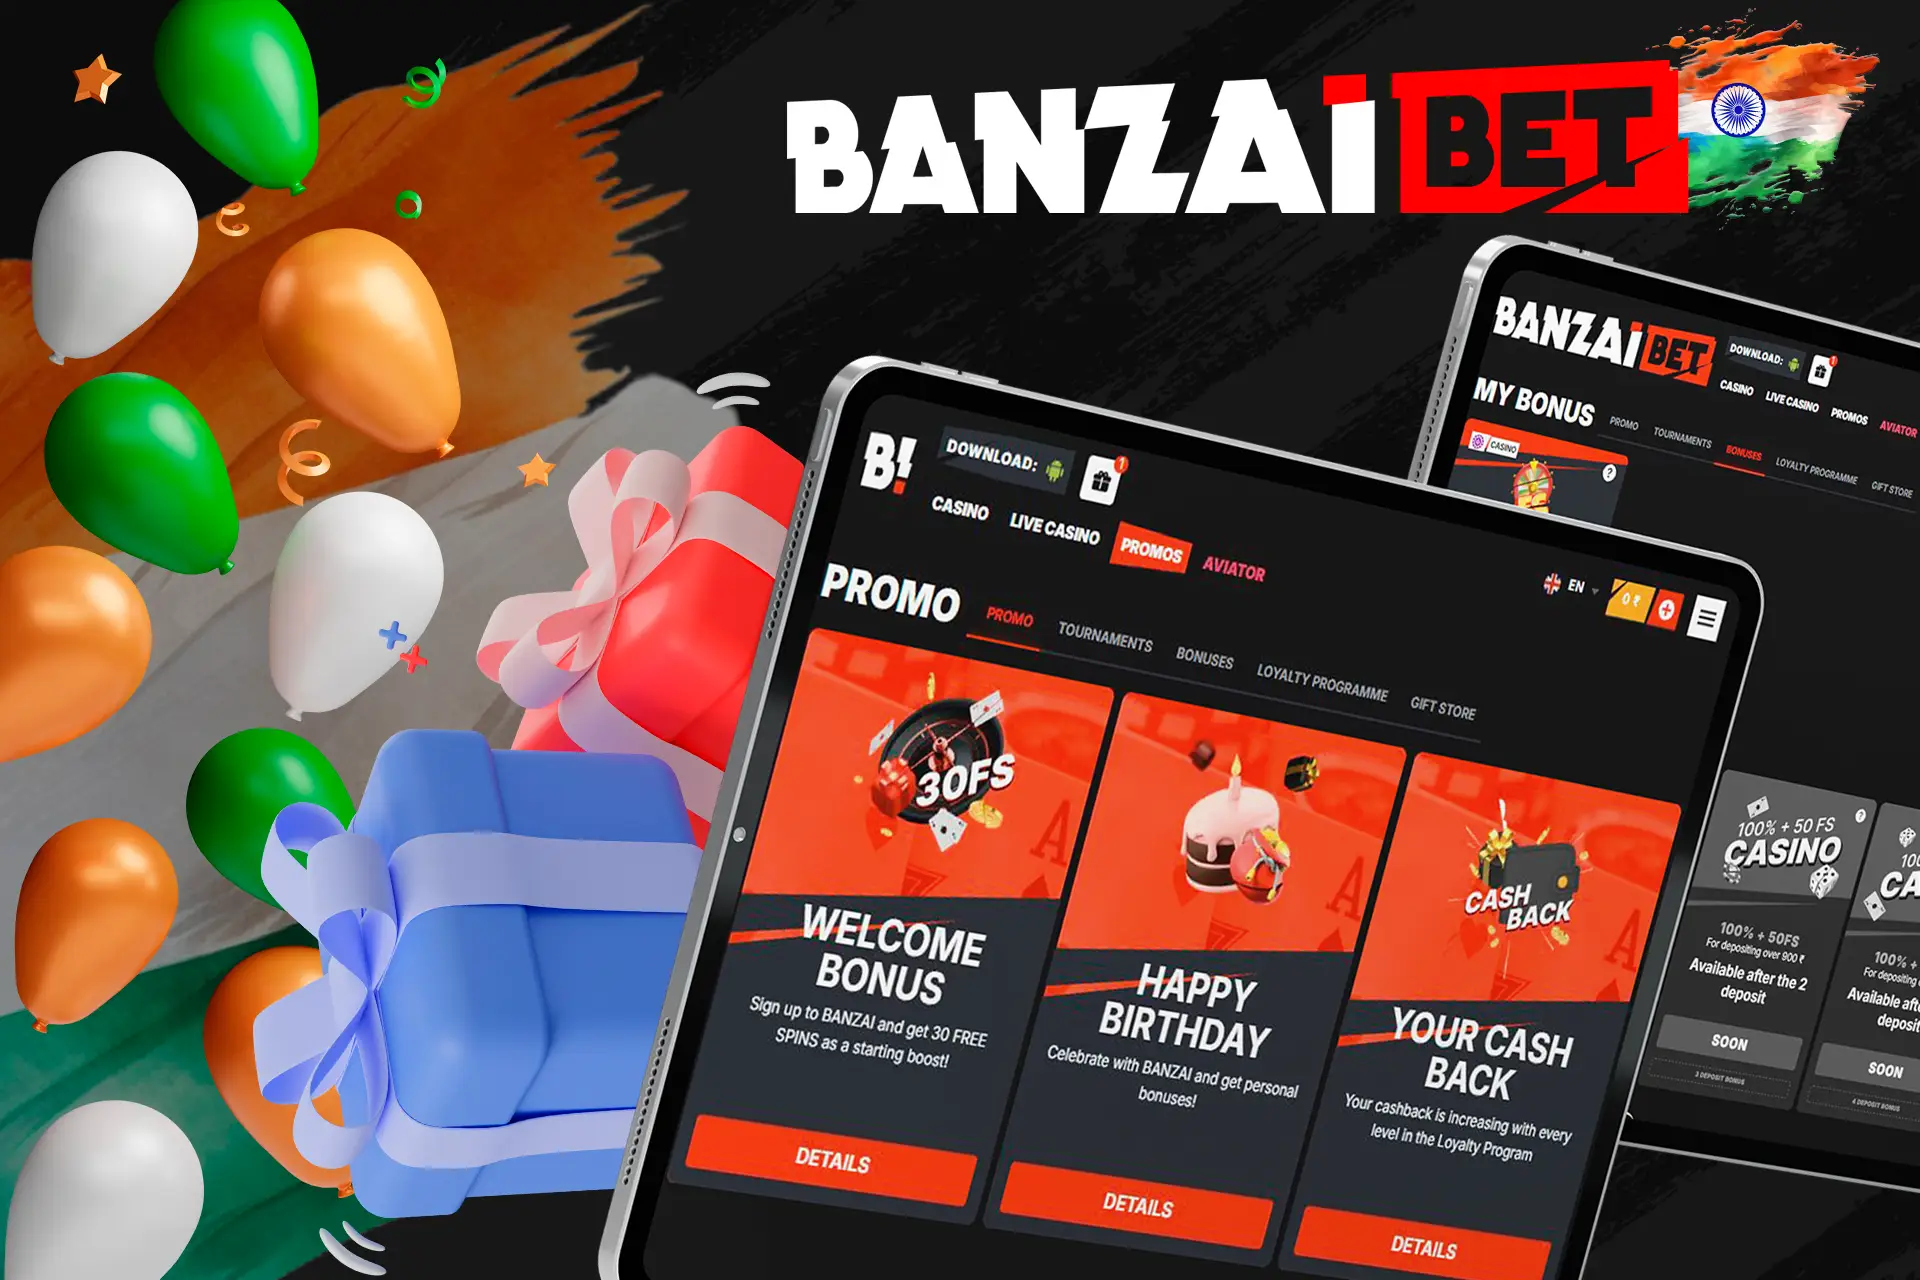 Lots of bonuses and promotions at Banzaibet India